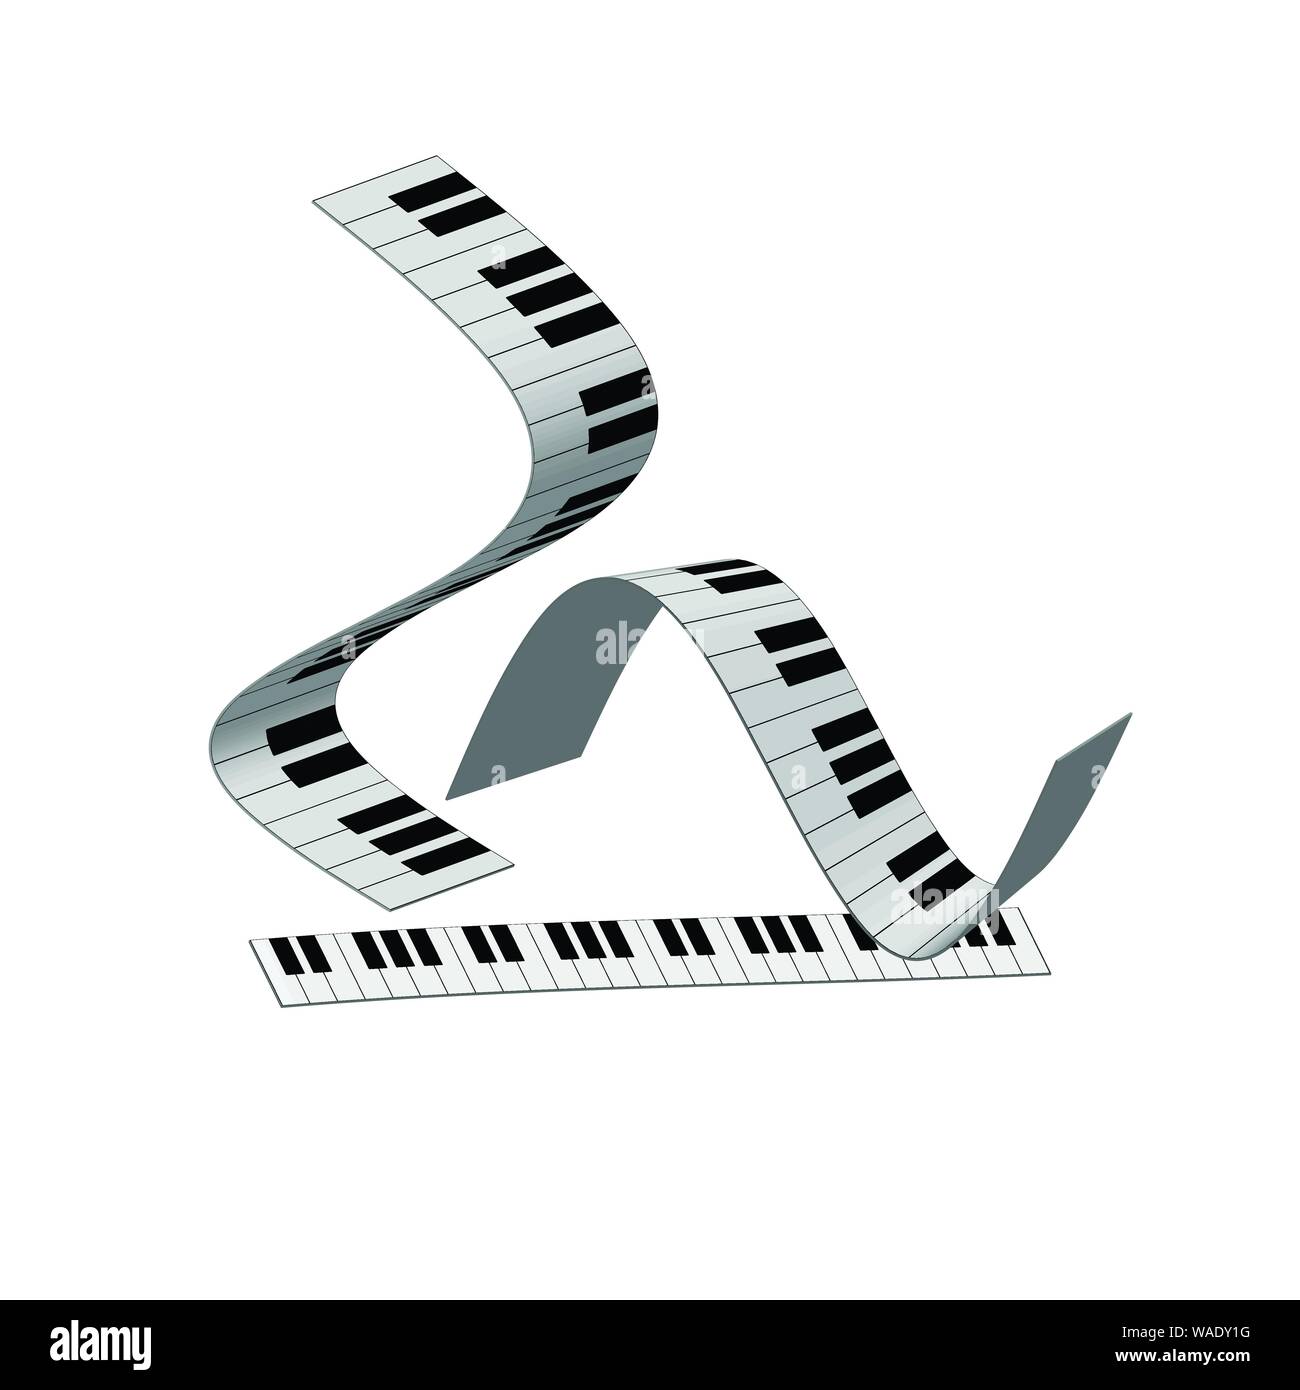 Piano keyboards vector illustrations. Various angles and views Stock Vector